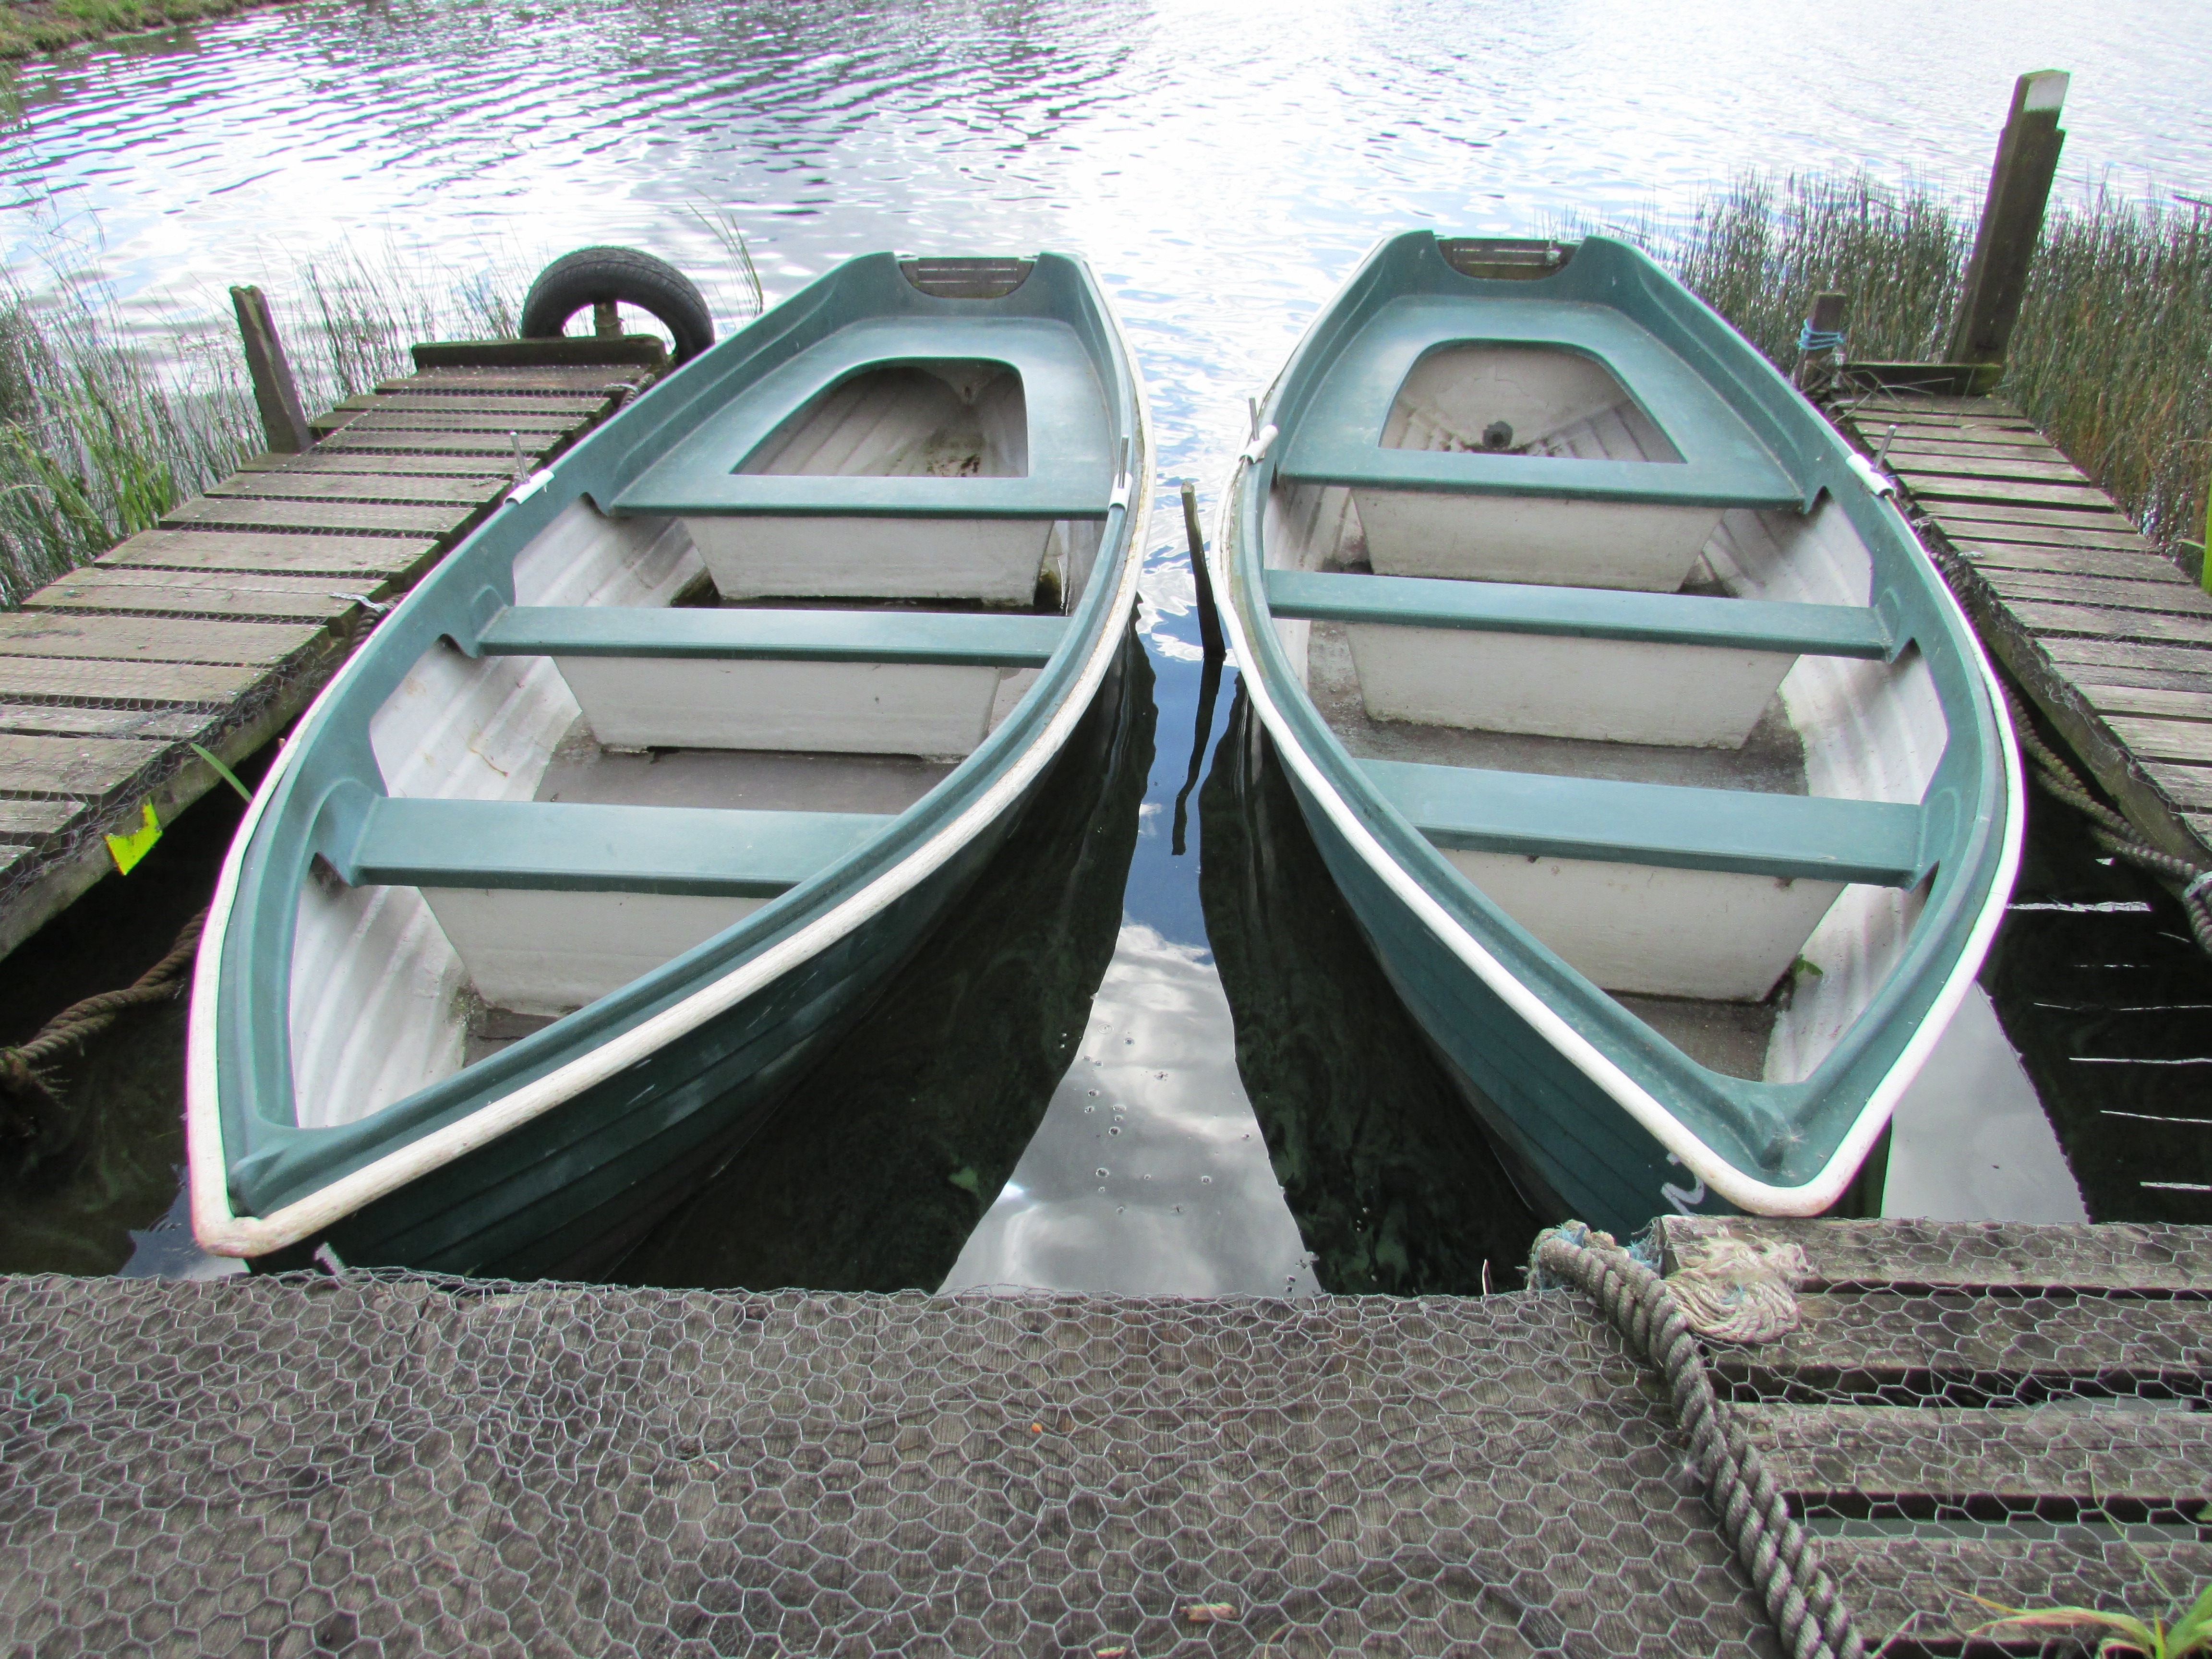 2 grey and white canoe